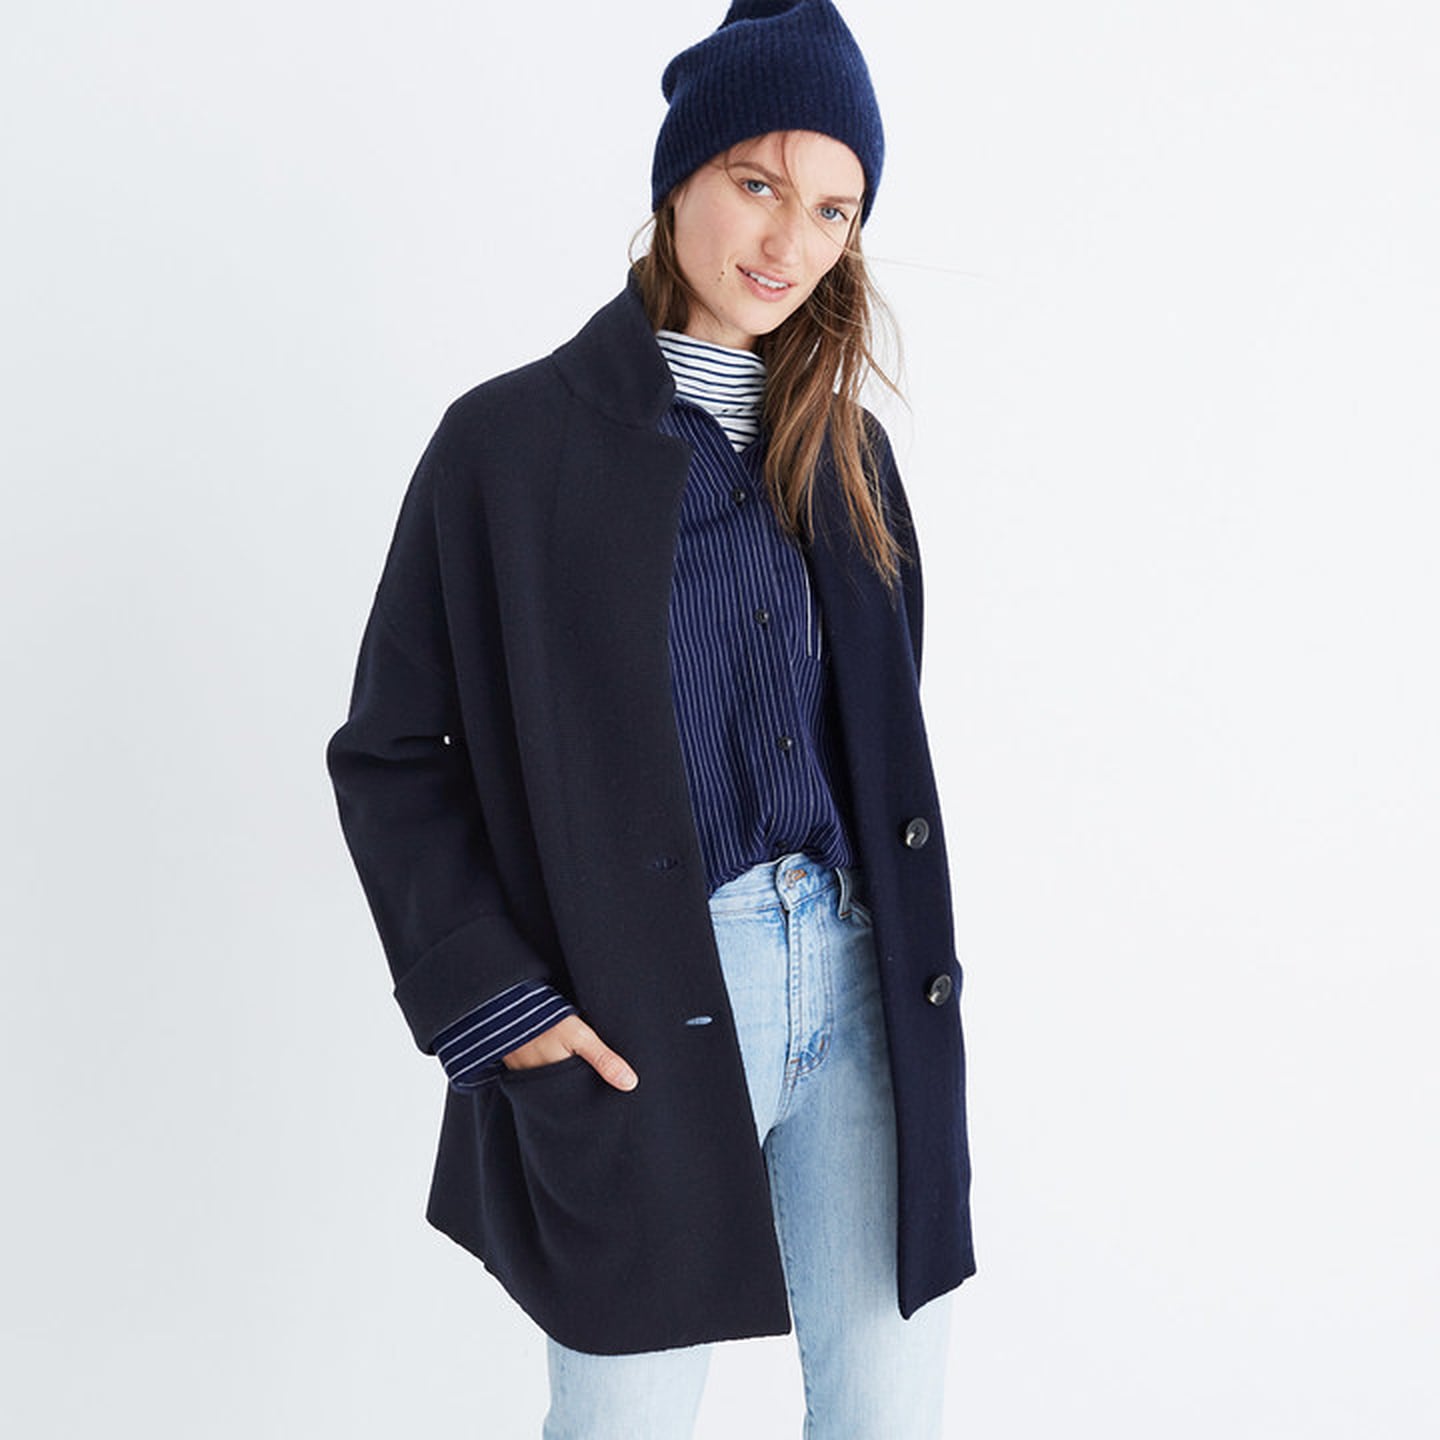 Winter Jackets 2018 | POPSUGAR Fashion